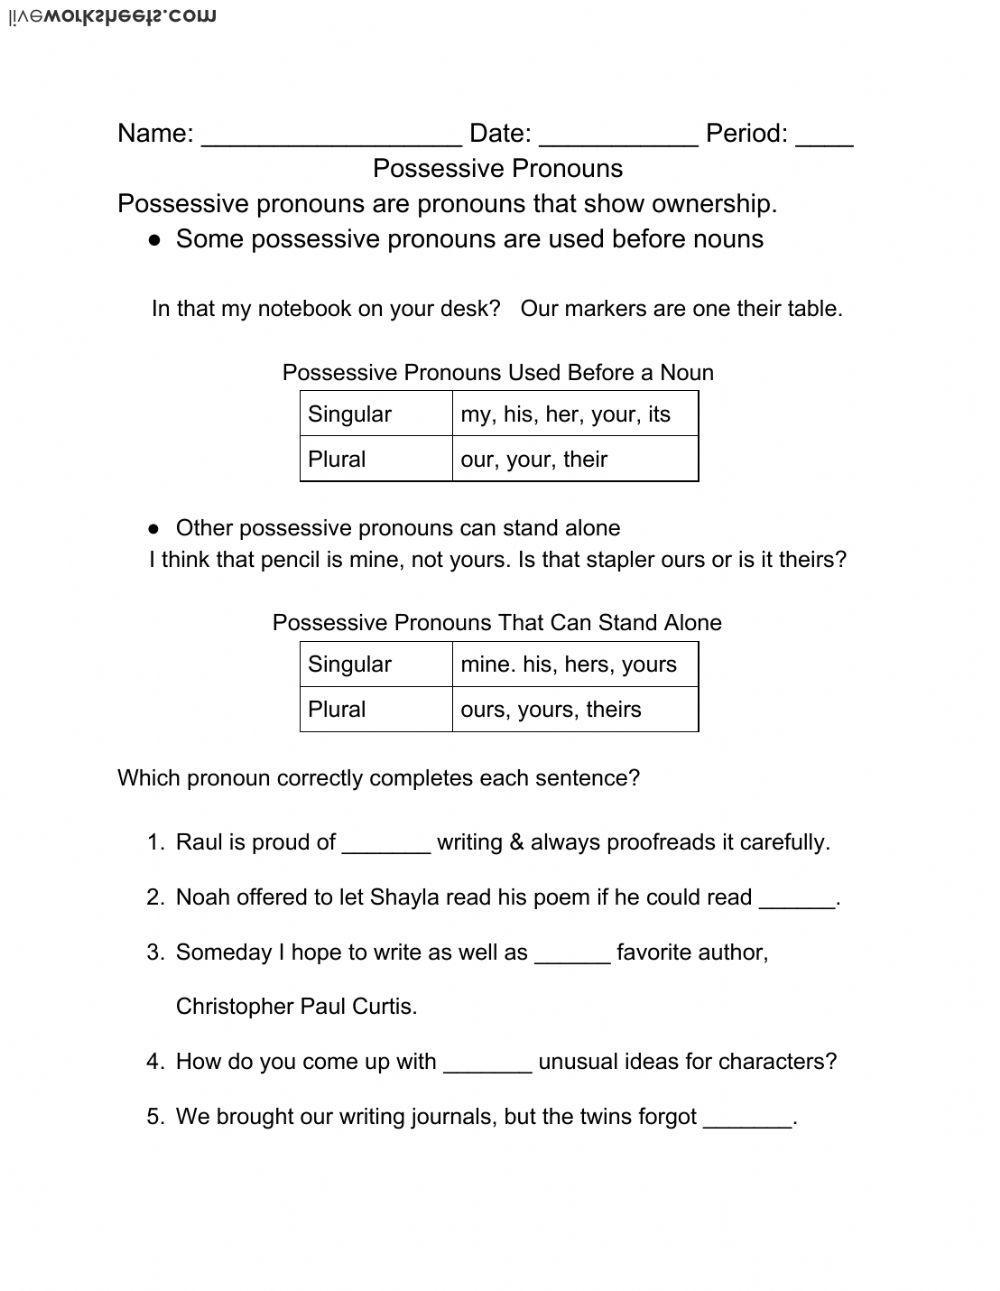 201-Lesson 3- Possessive Pronouns